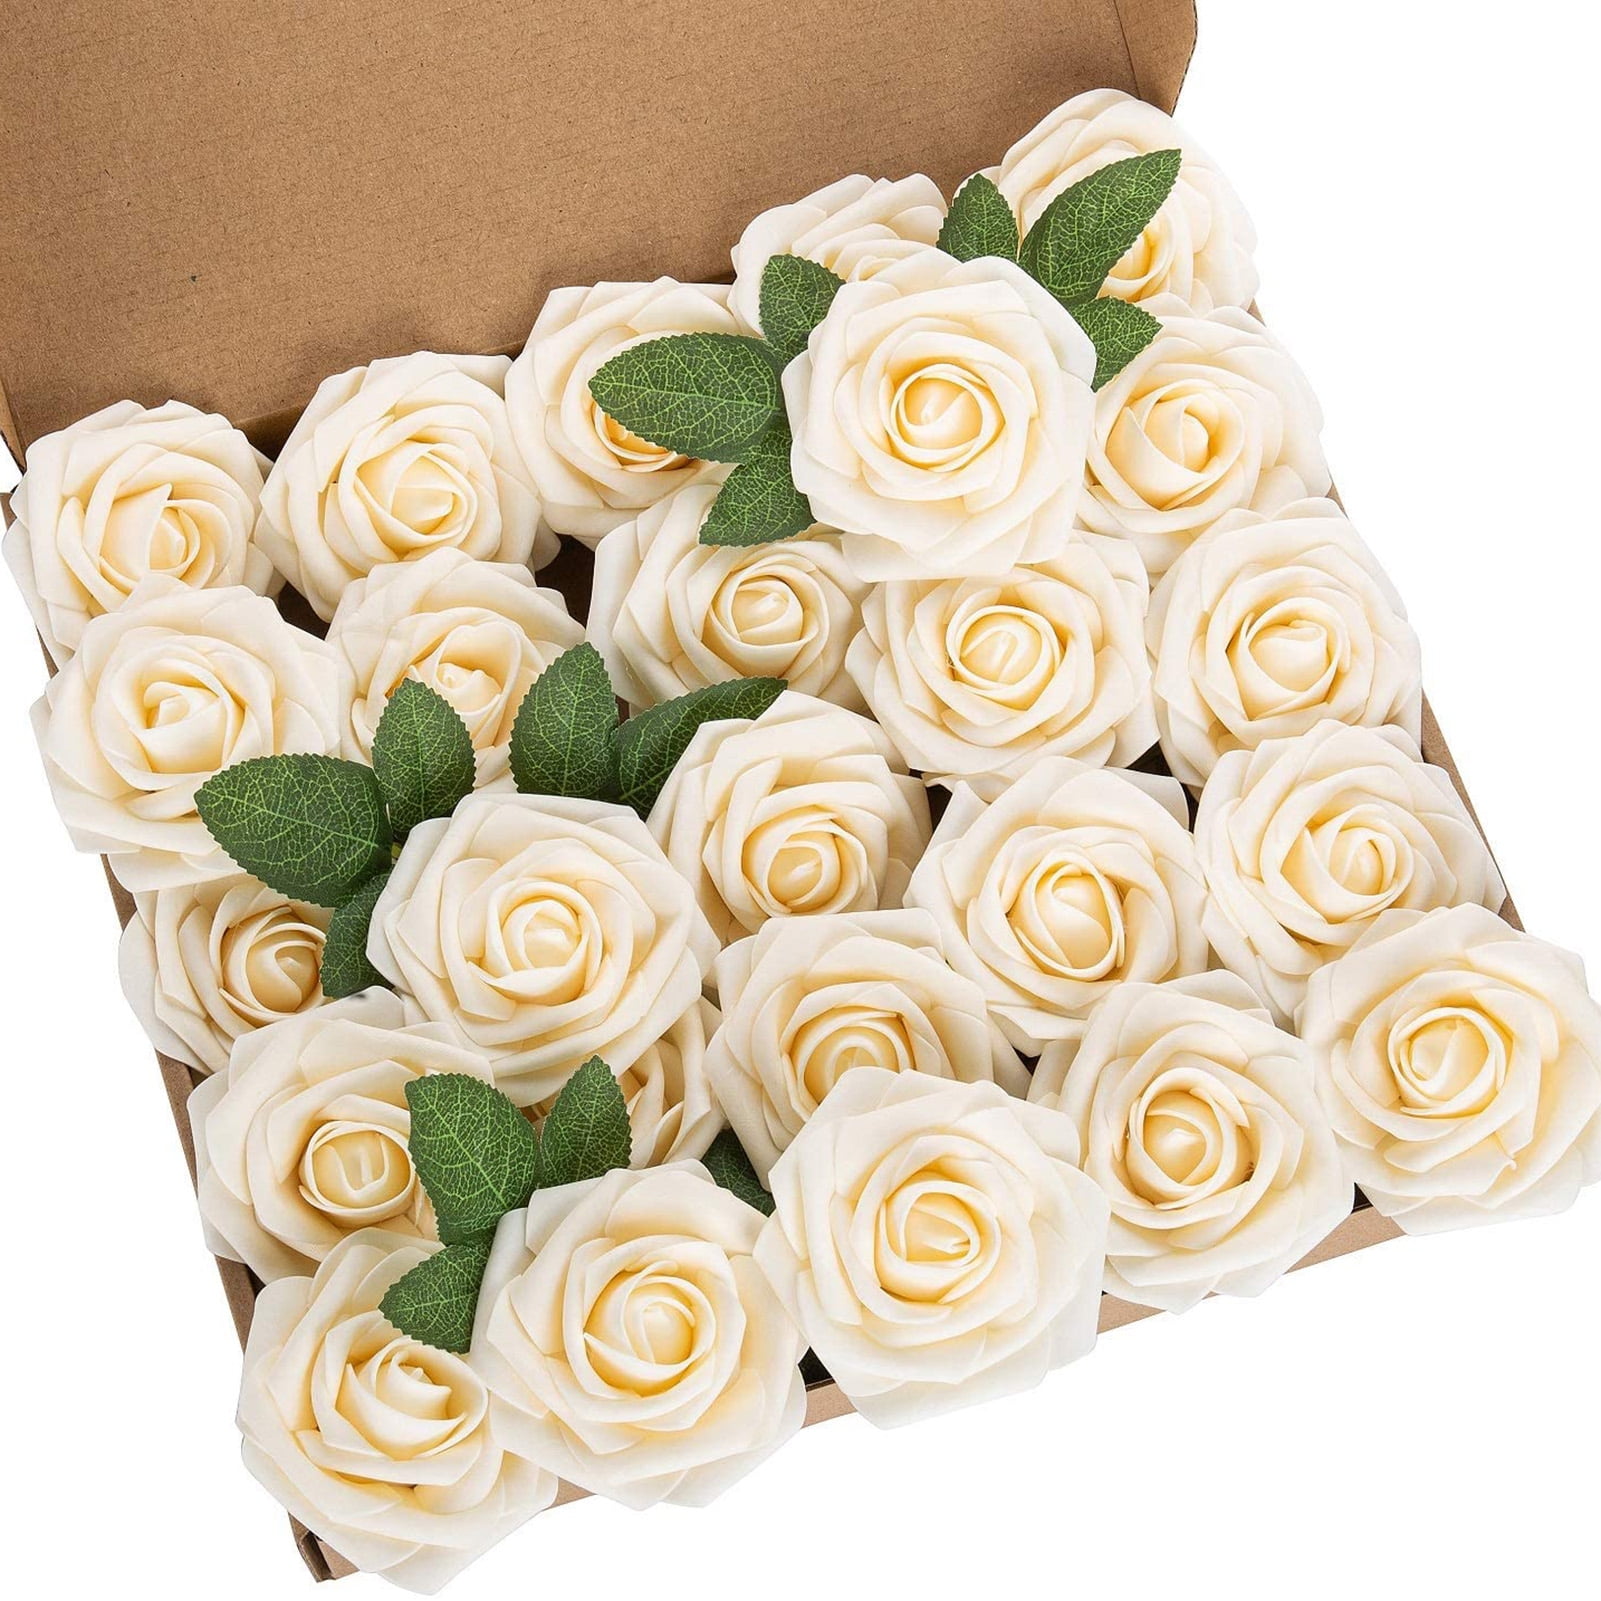 Details about   Heads 8CM Artificial PE Foam Rose Flowers Bride Bouquet Flower For Wedding Party